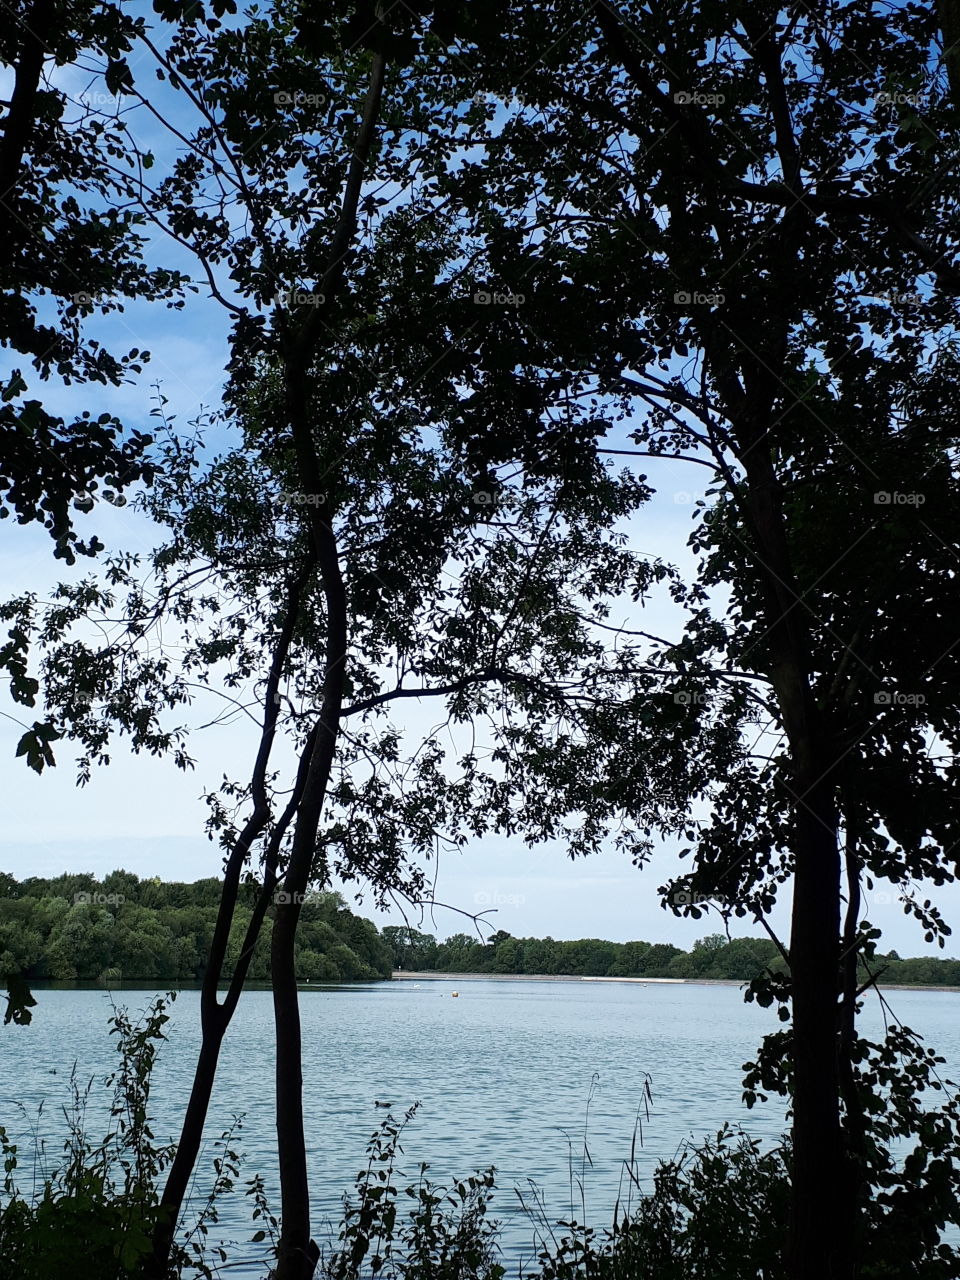 A Lake Between Trees